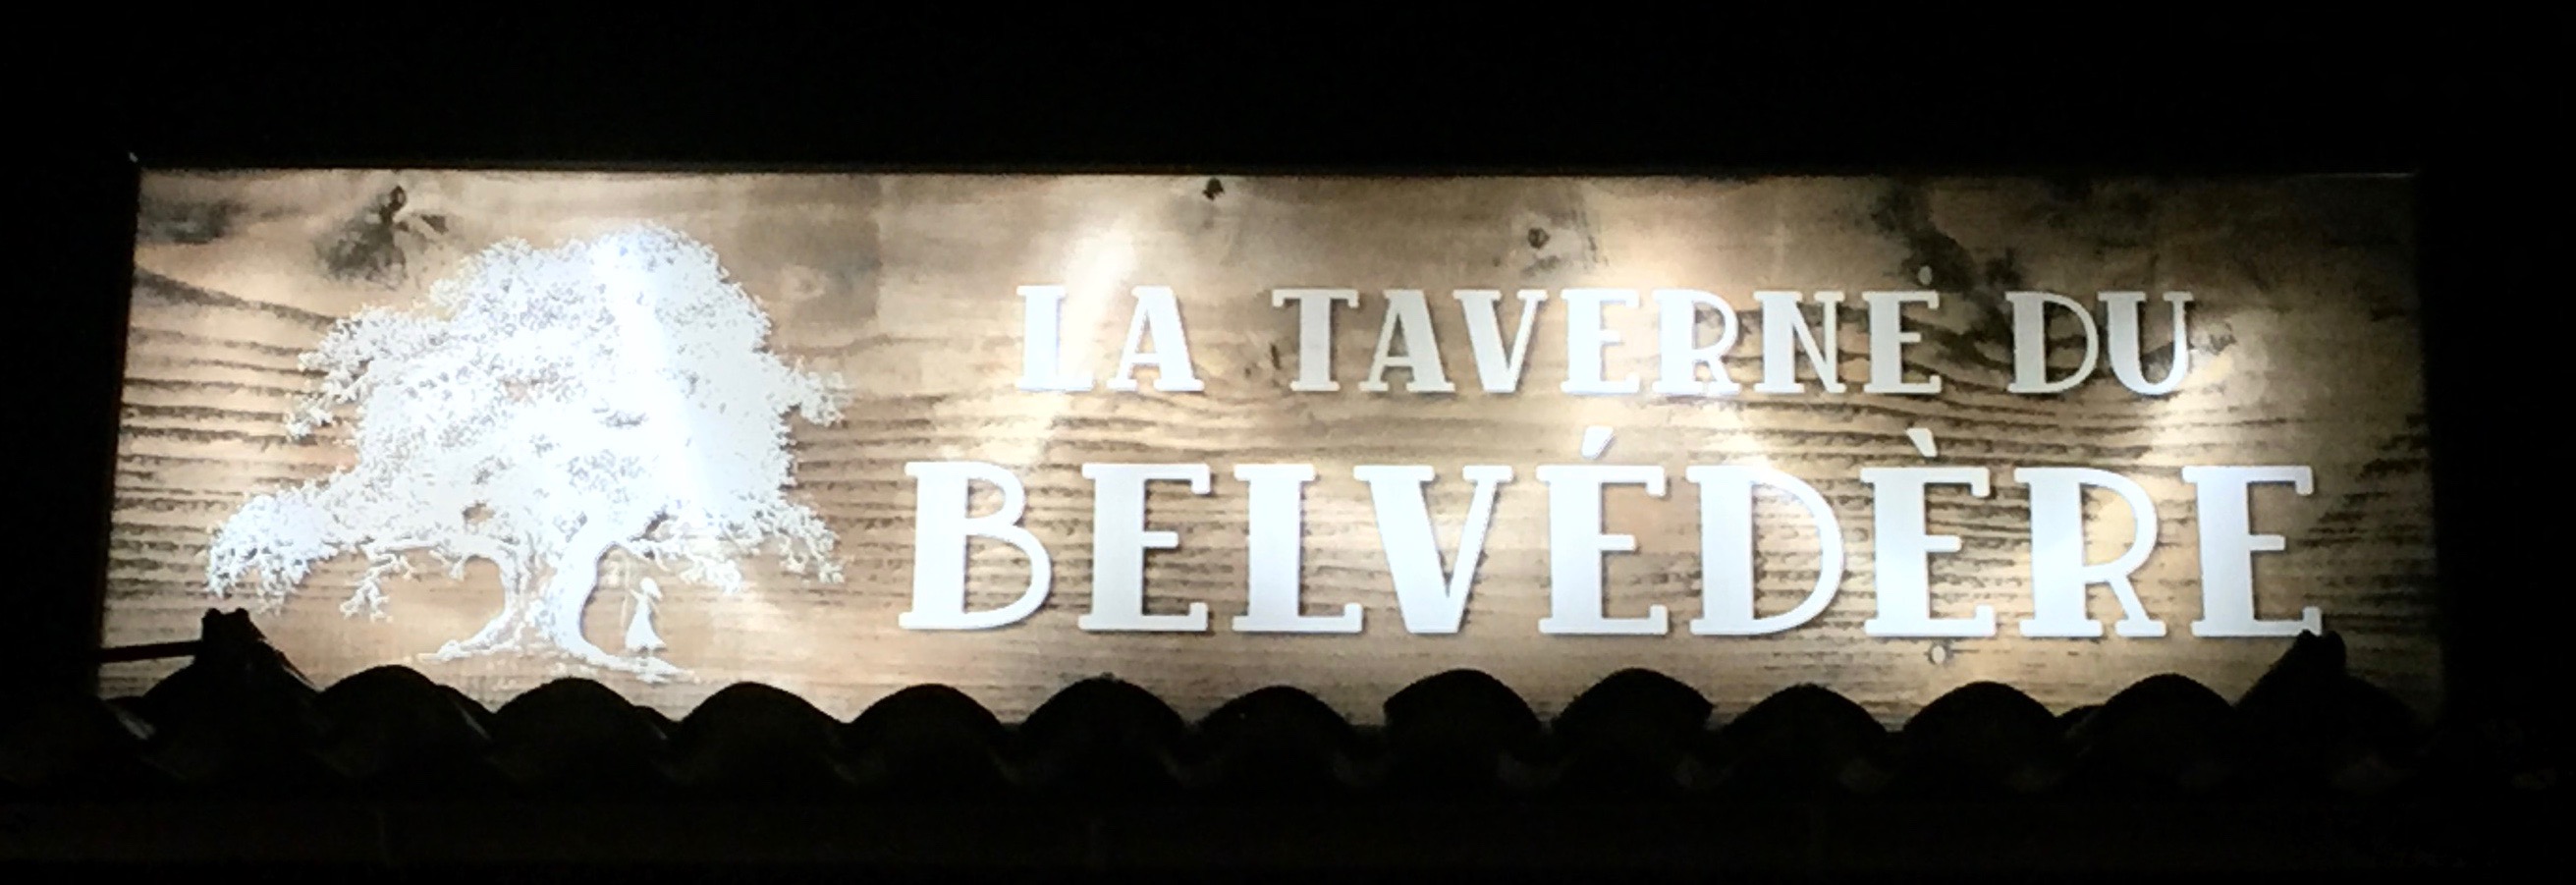 Taverne sign at night